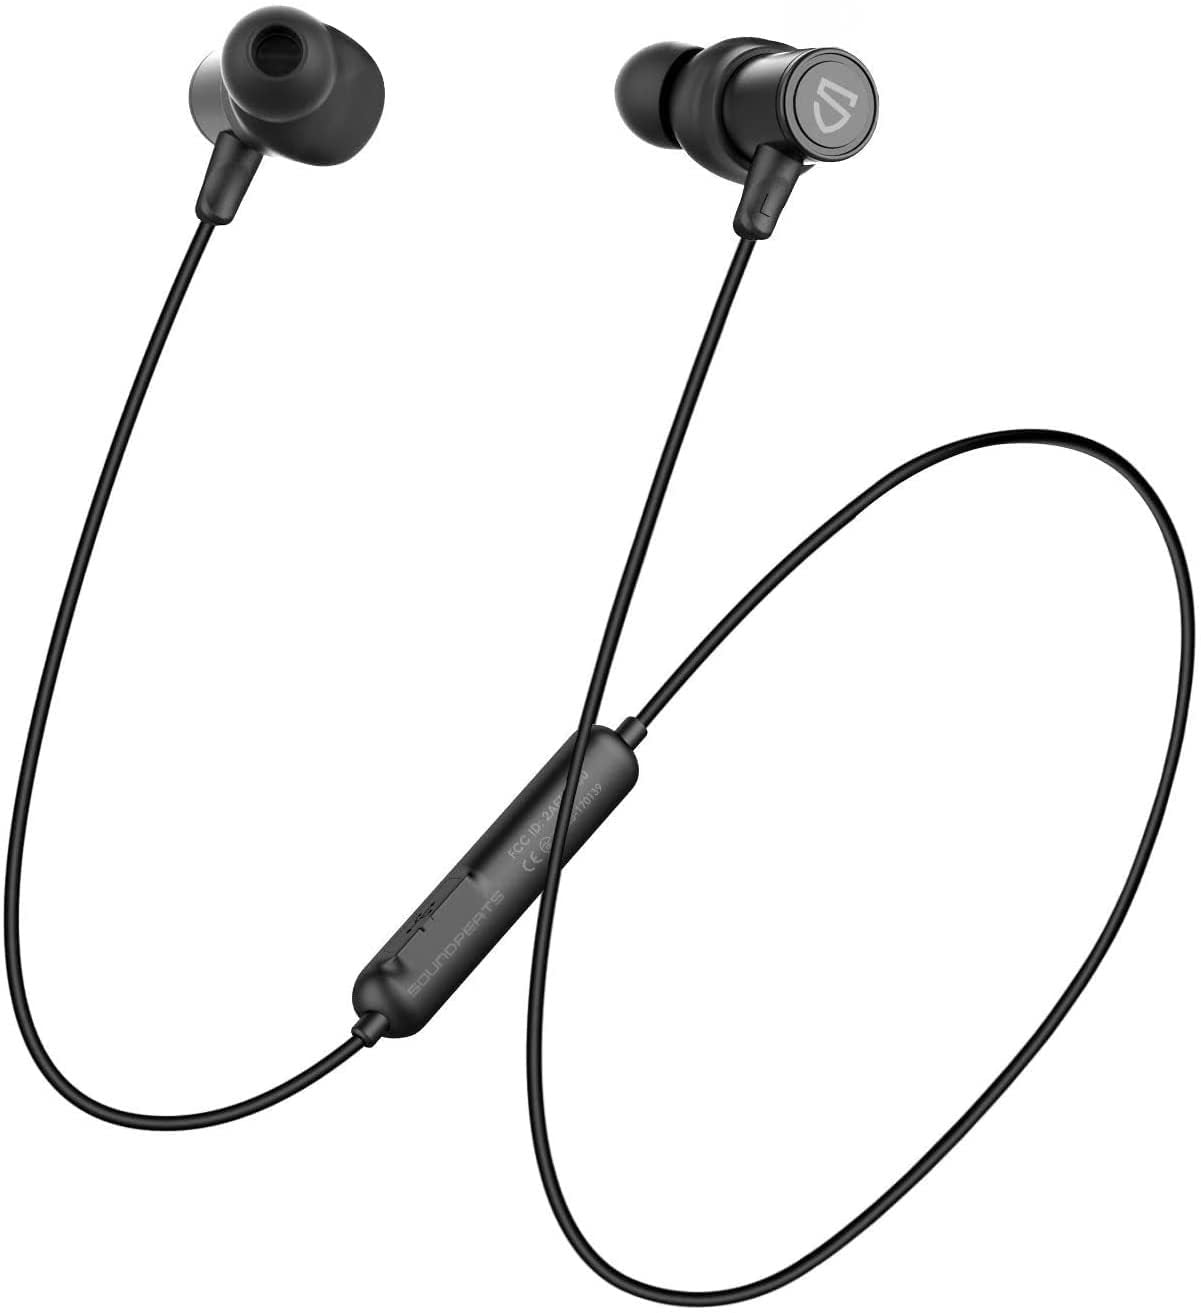  Soundpeats Wireless Earbuds Bluetooth V5.2 Headphones with  Qualcomm QCC3040 Wireless Earphones, TrueWireless Mirroring, 4-Mic Tech and  cVc 8.0 Noise Cancellation, aptX Codec, Total 25 Hours - TrueAir2 :  Electronics